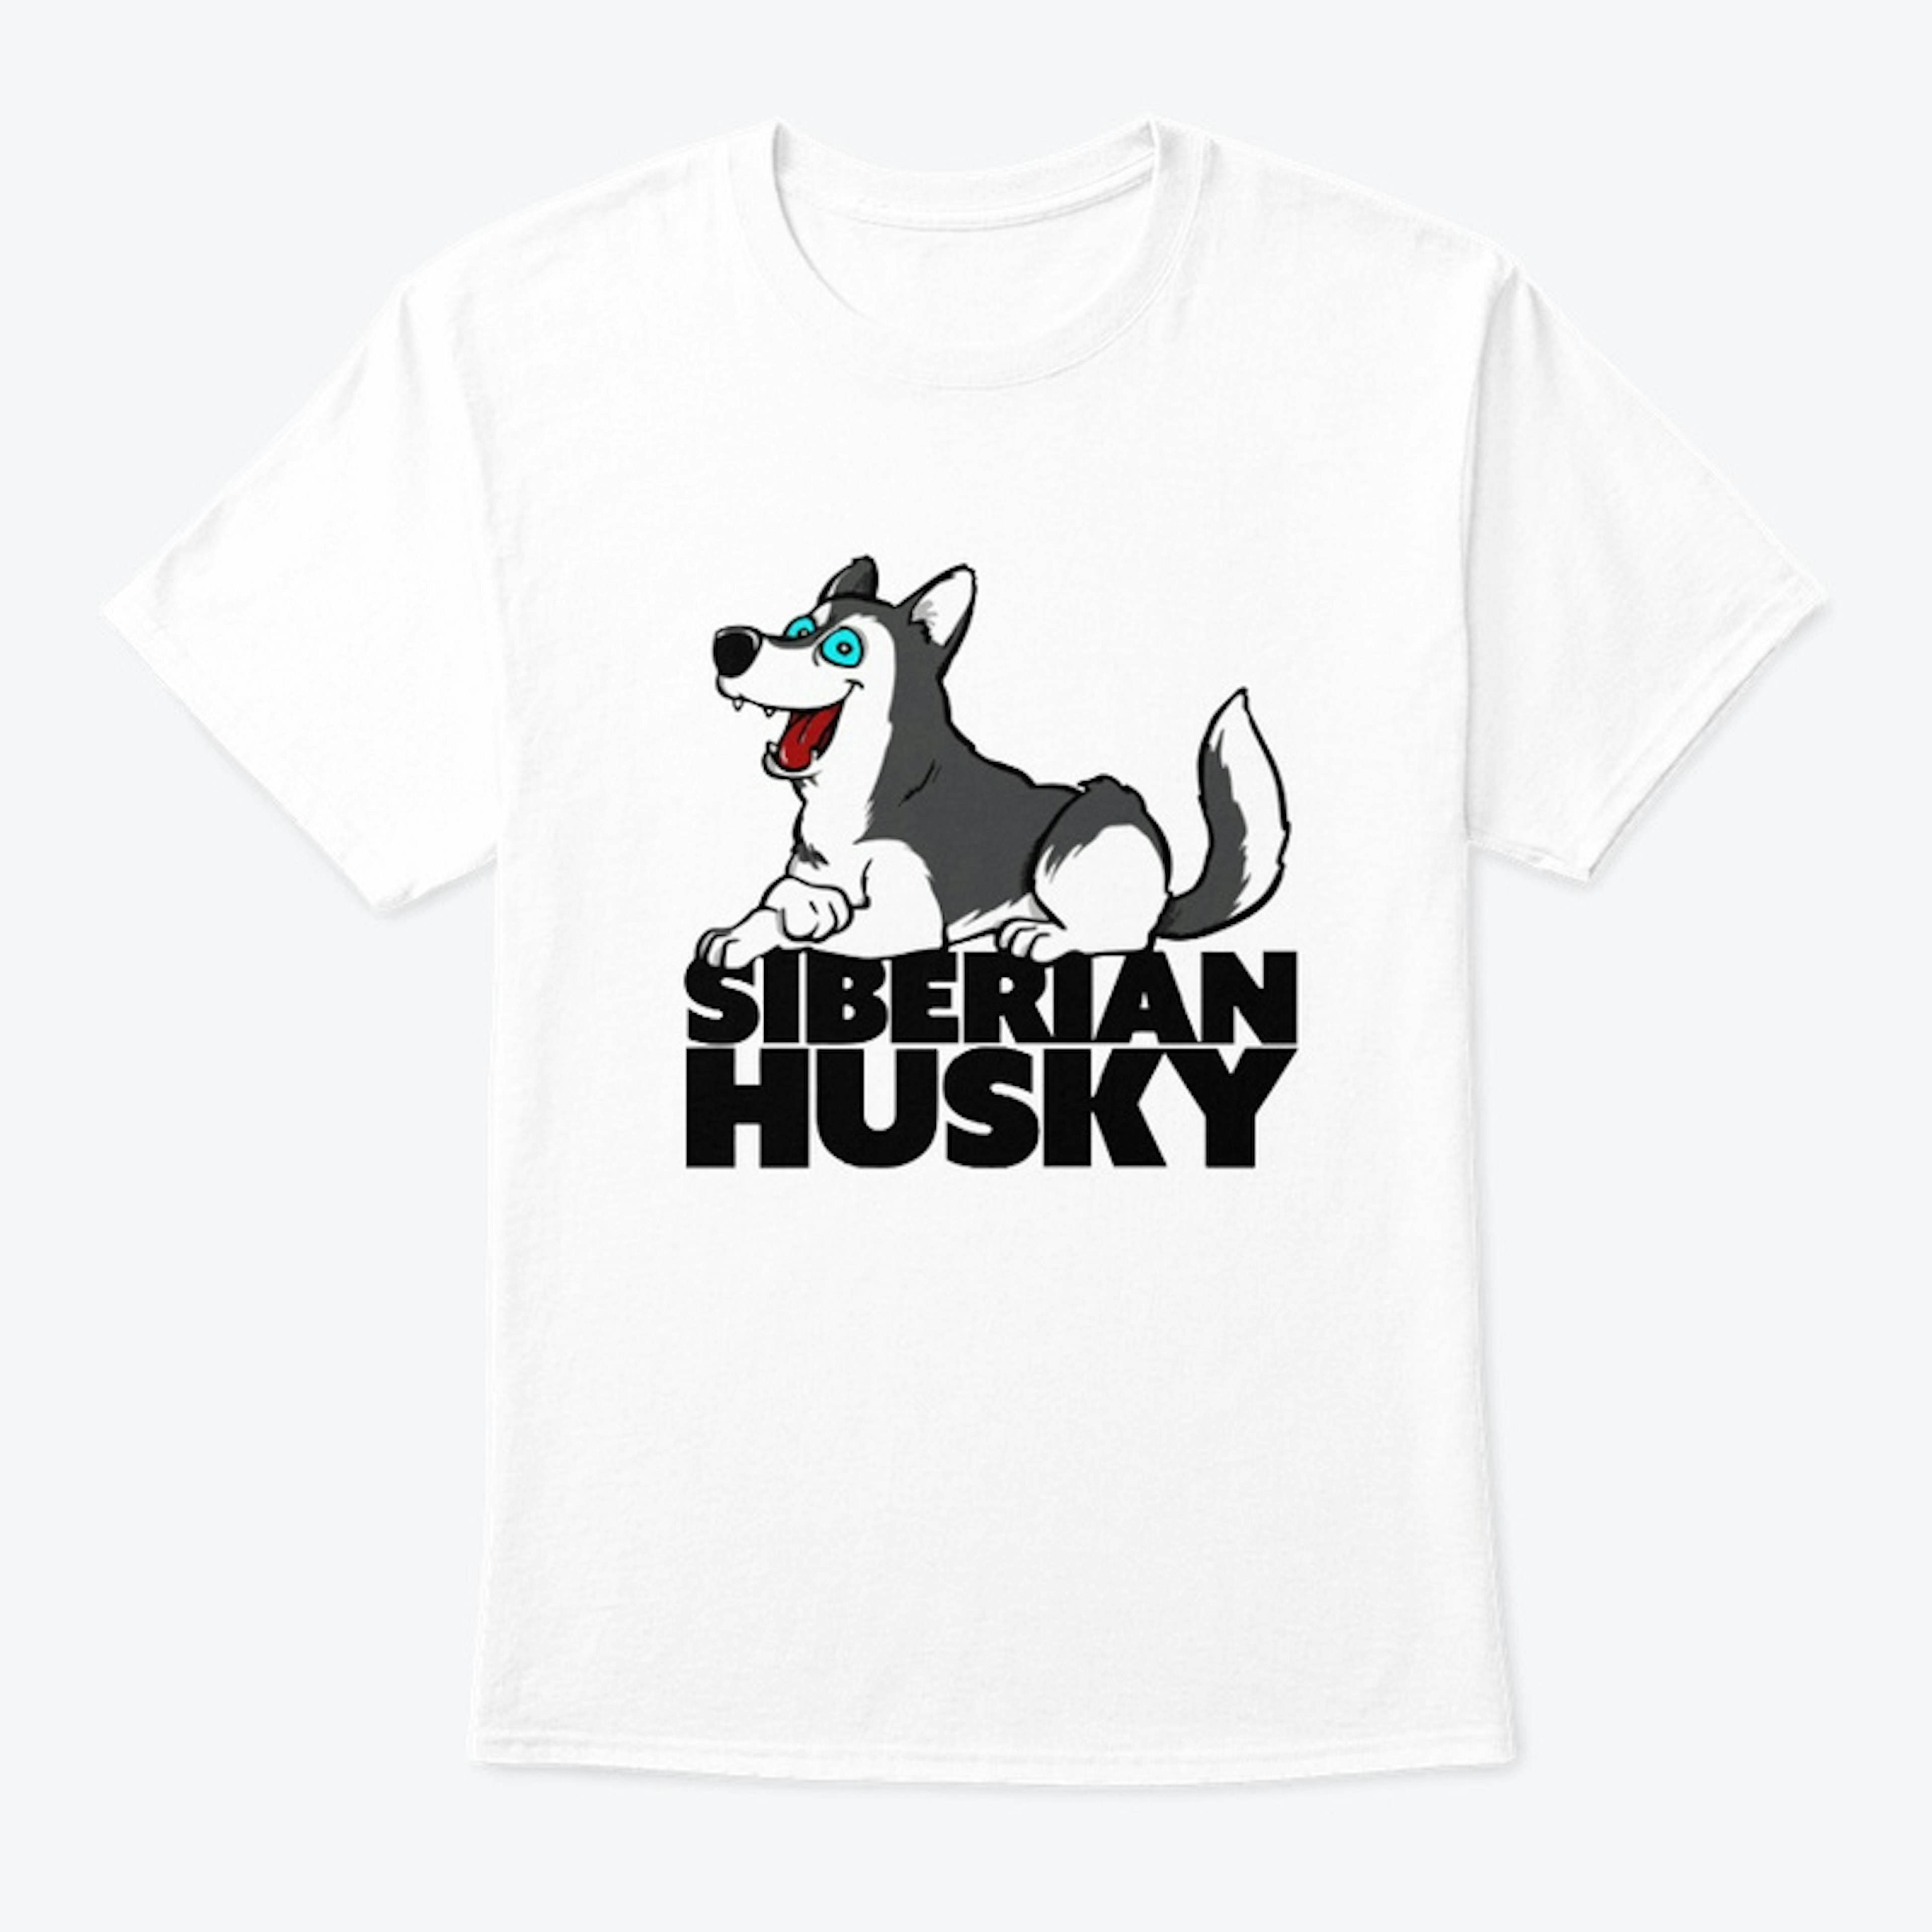  Siberian Husky Merchandise